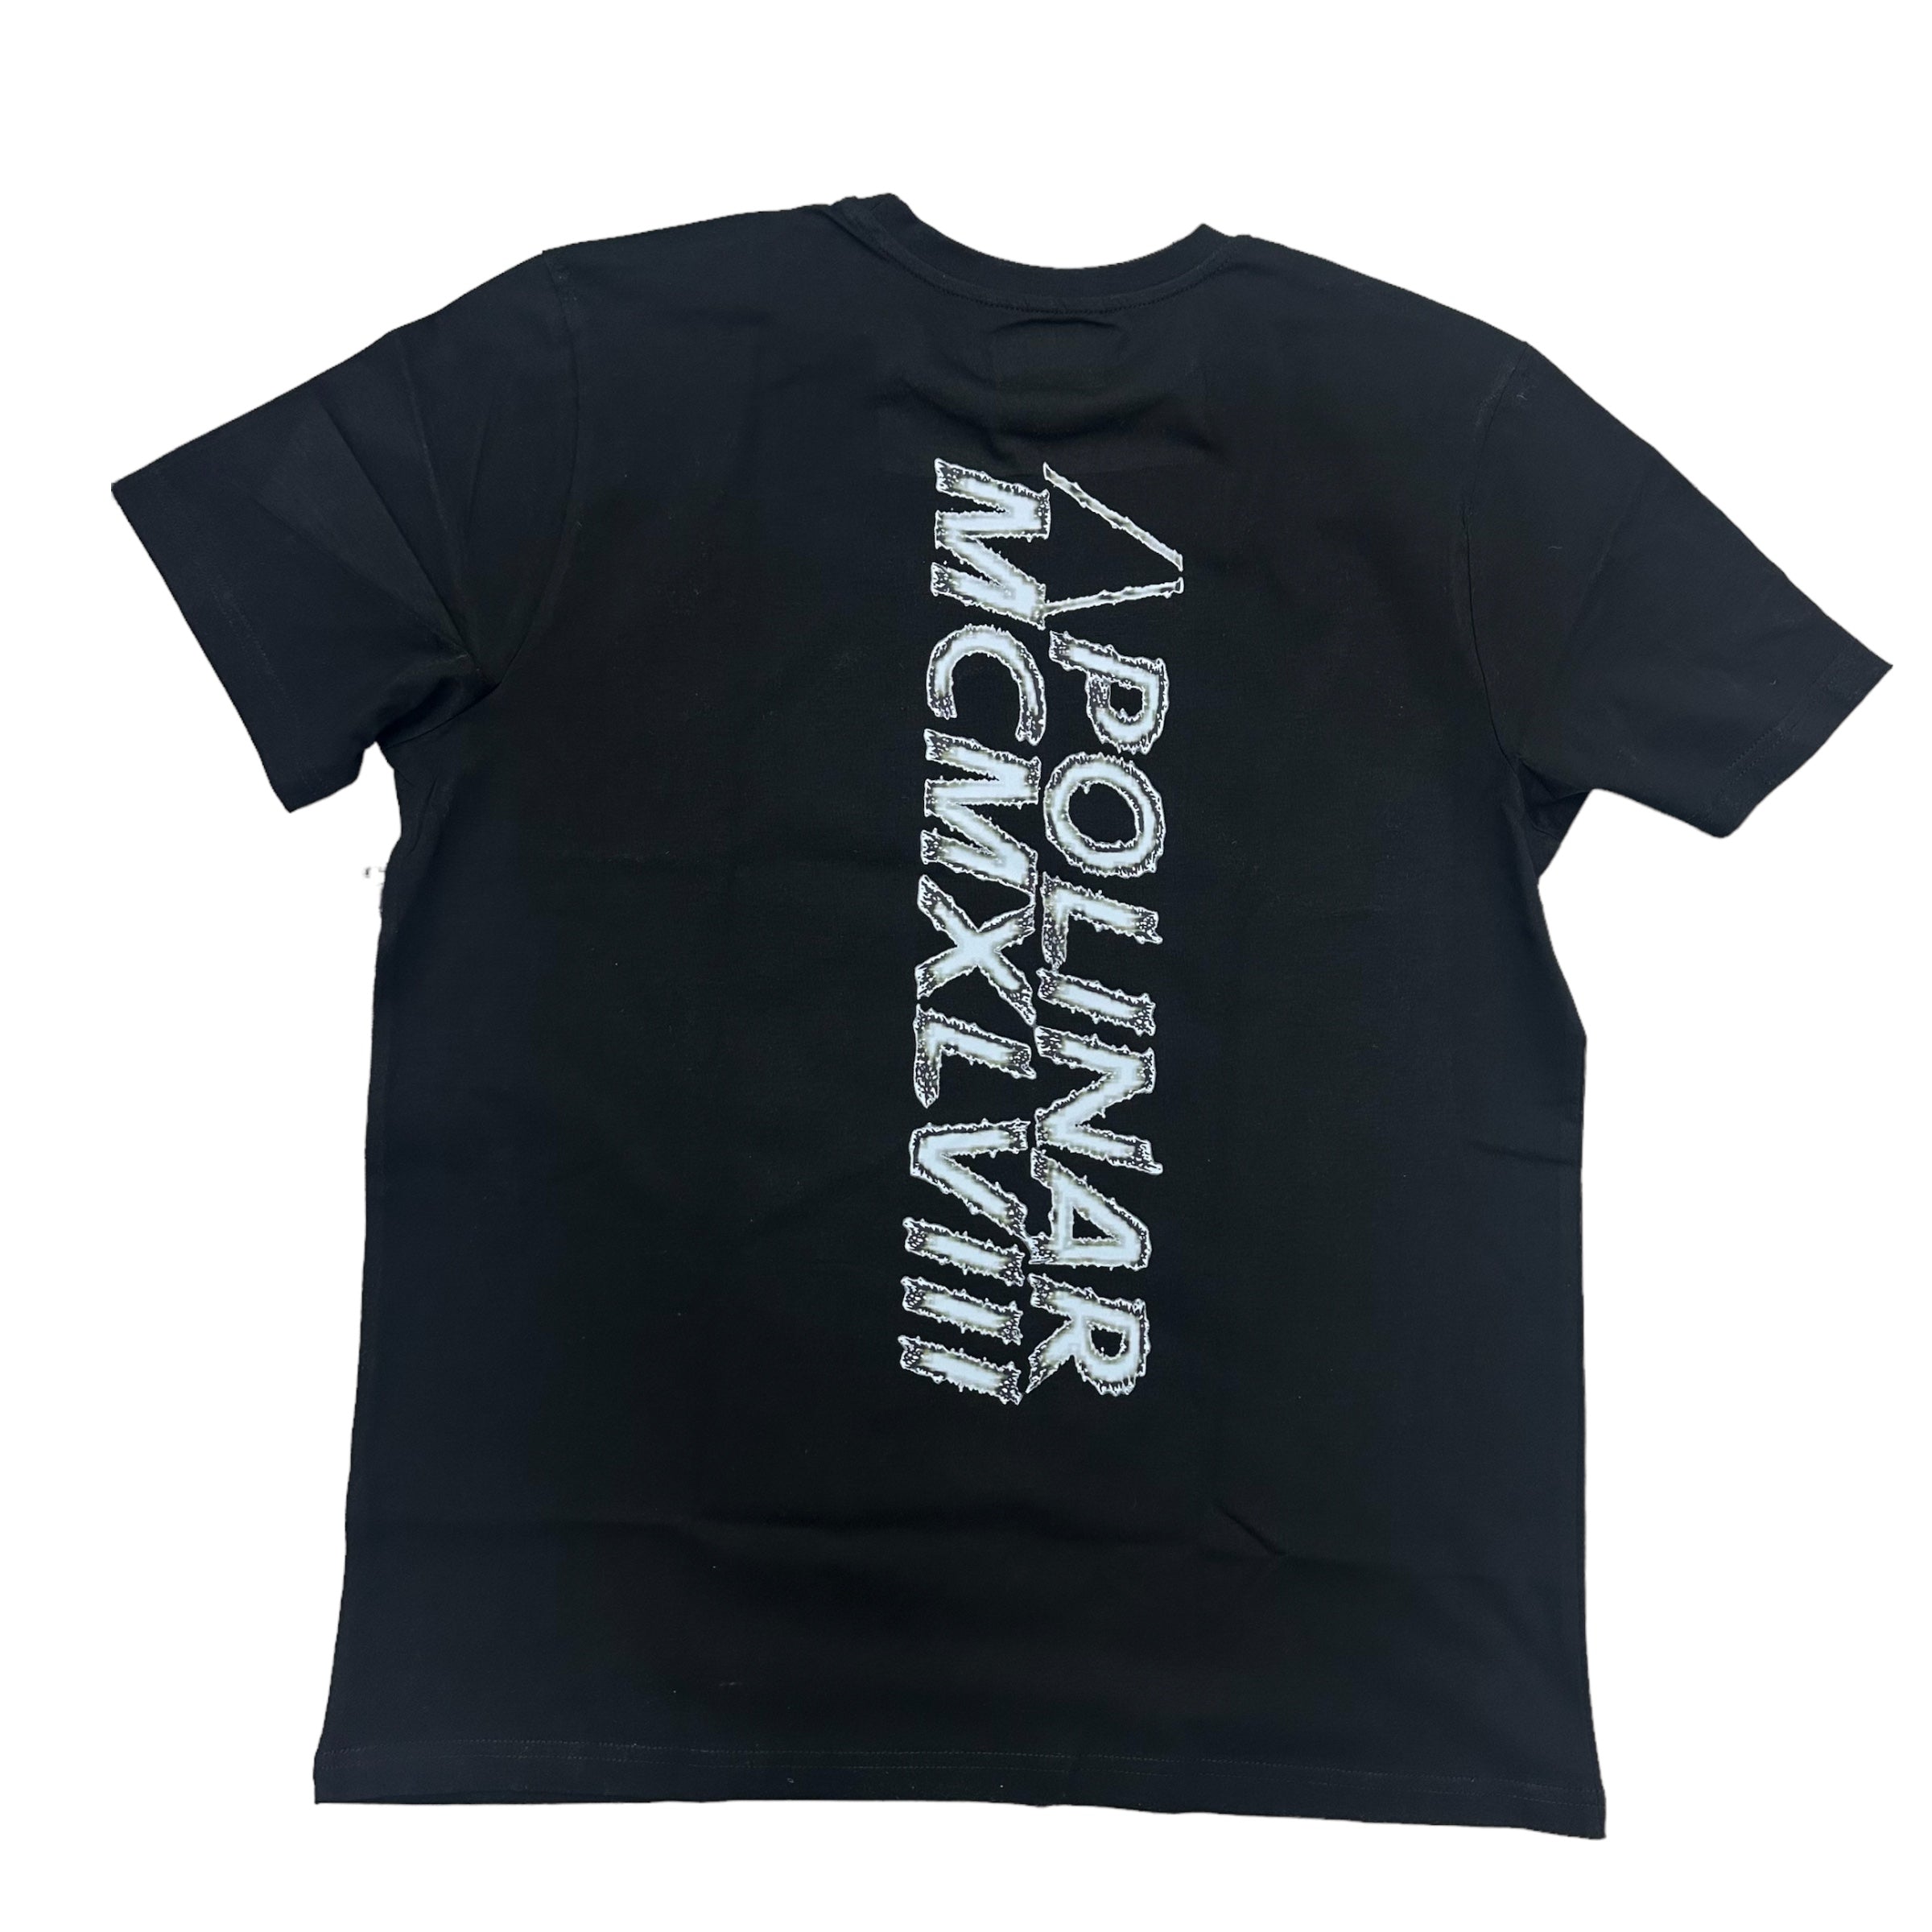 Apo Manners T-shirt Black